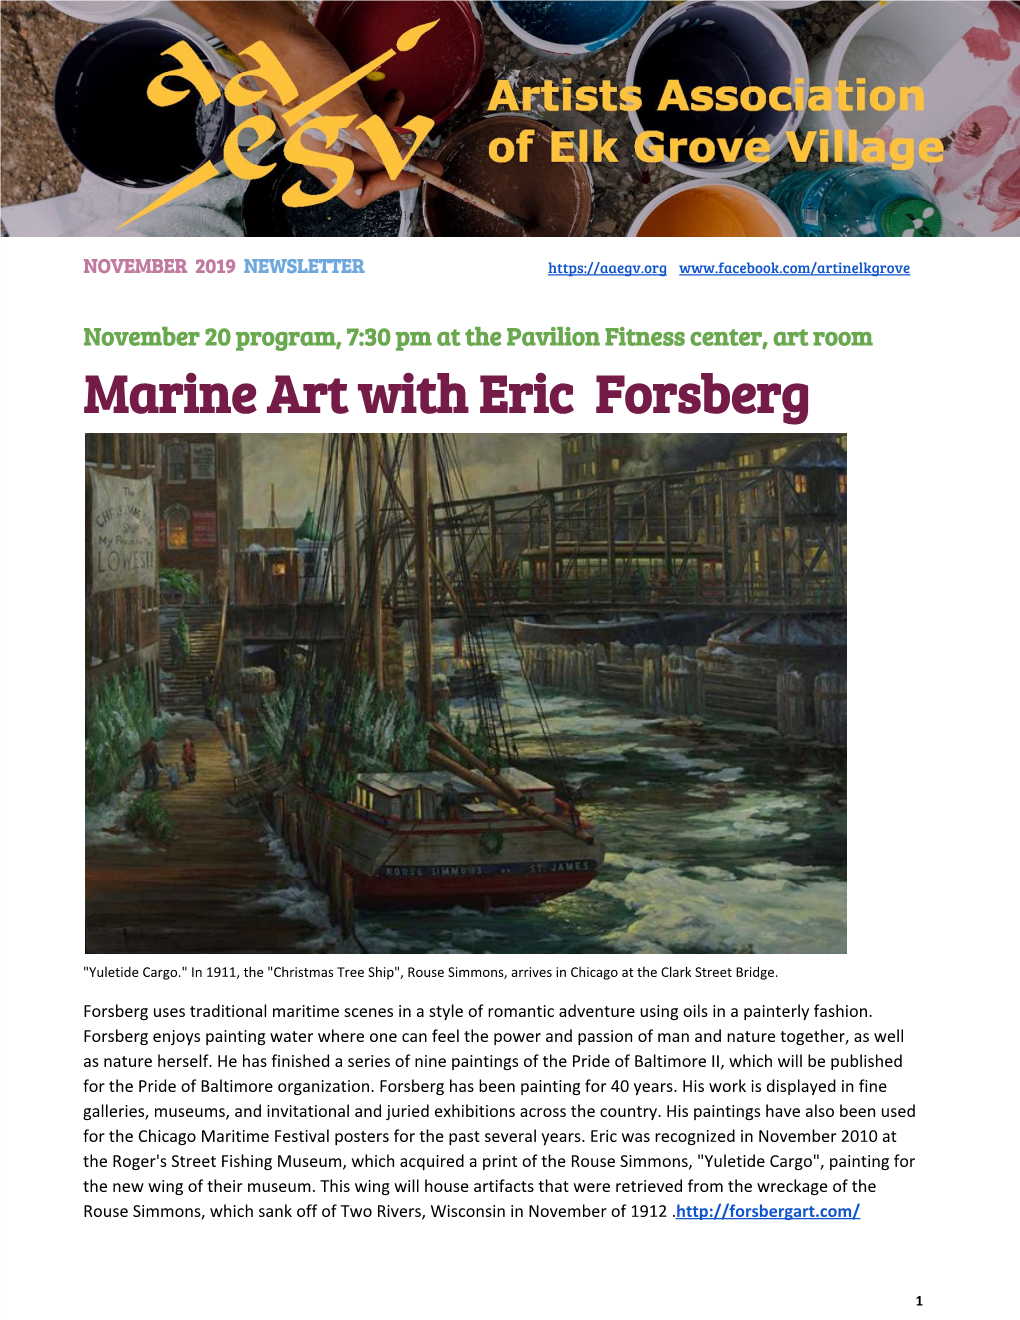 Marine Art with Eric Forsberg